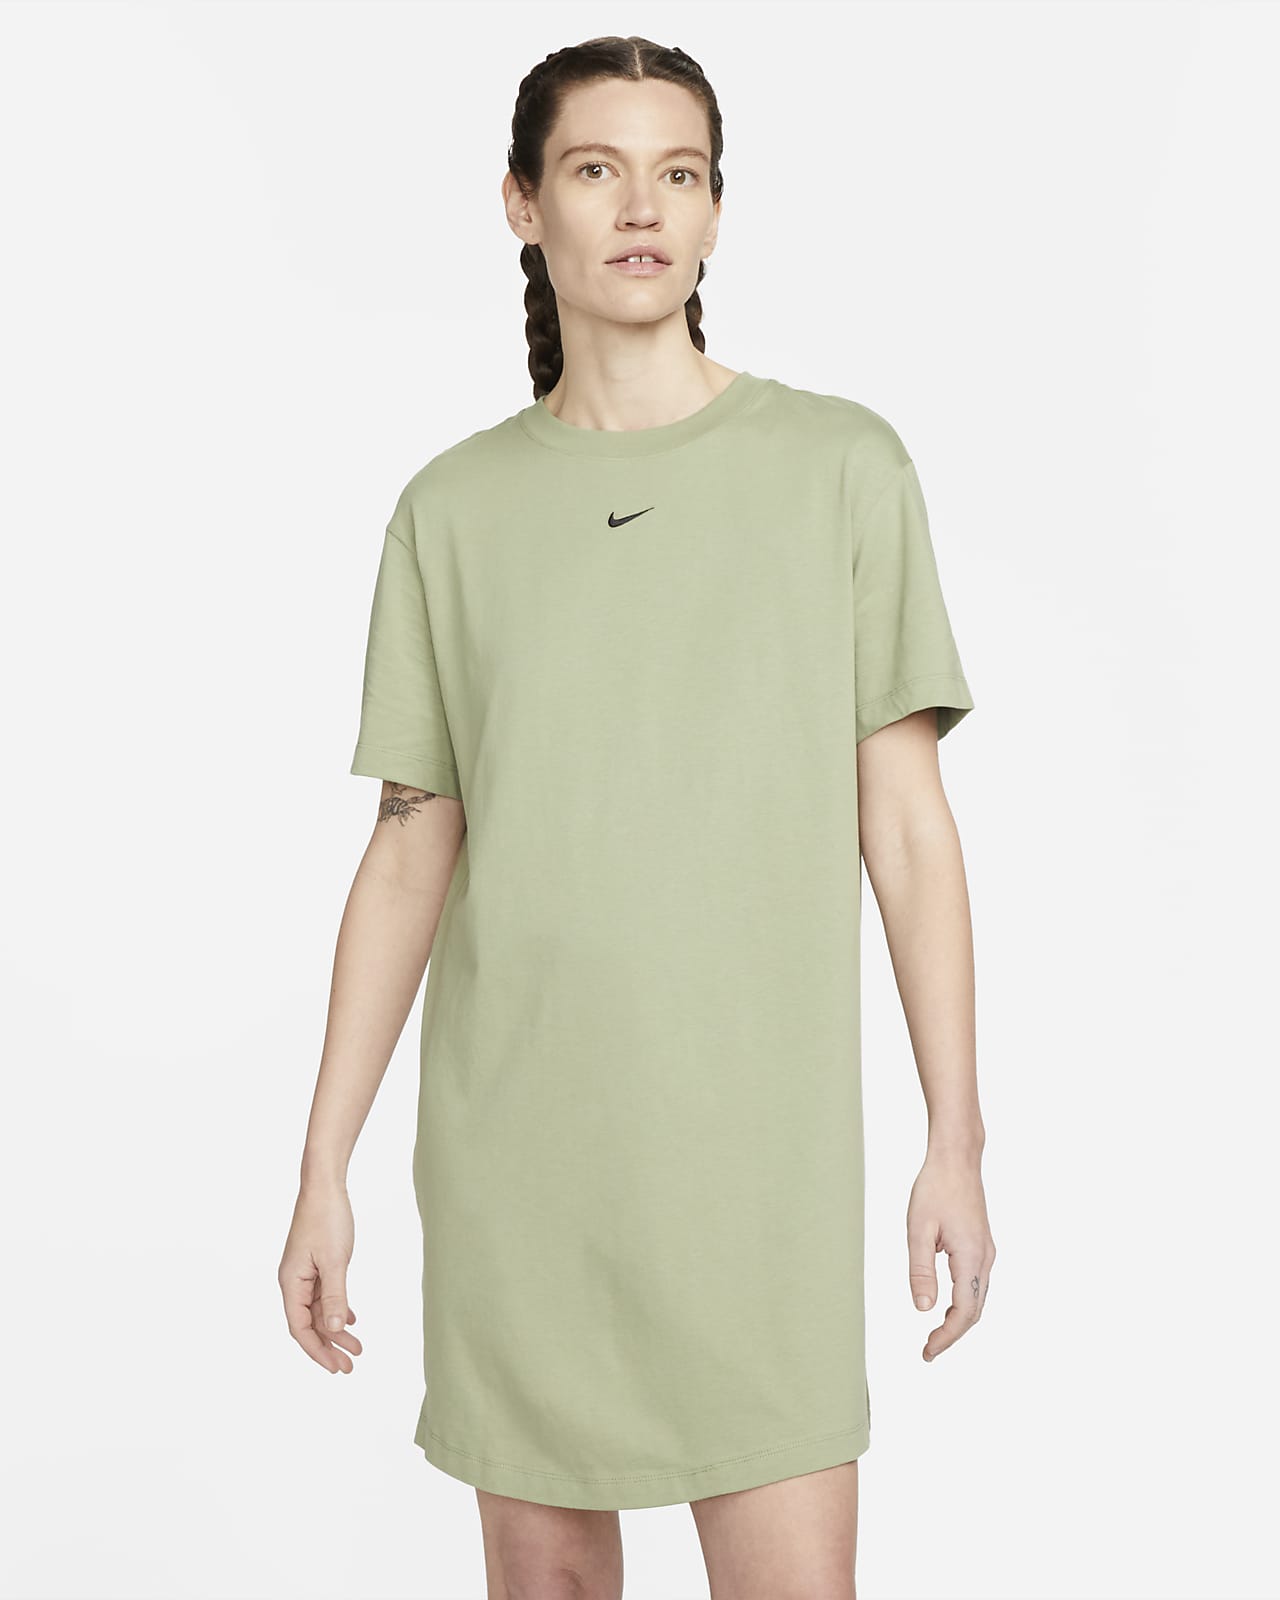 Oversized, maskinstrikket Nike Sportswear-T-shirt til kvinder